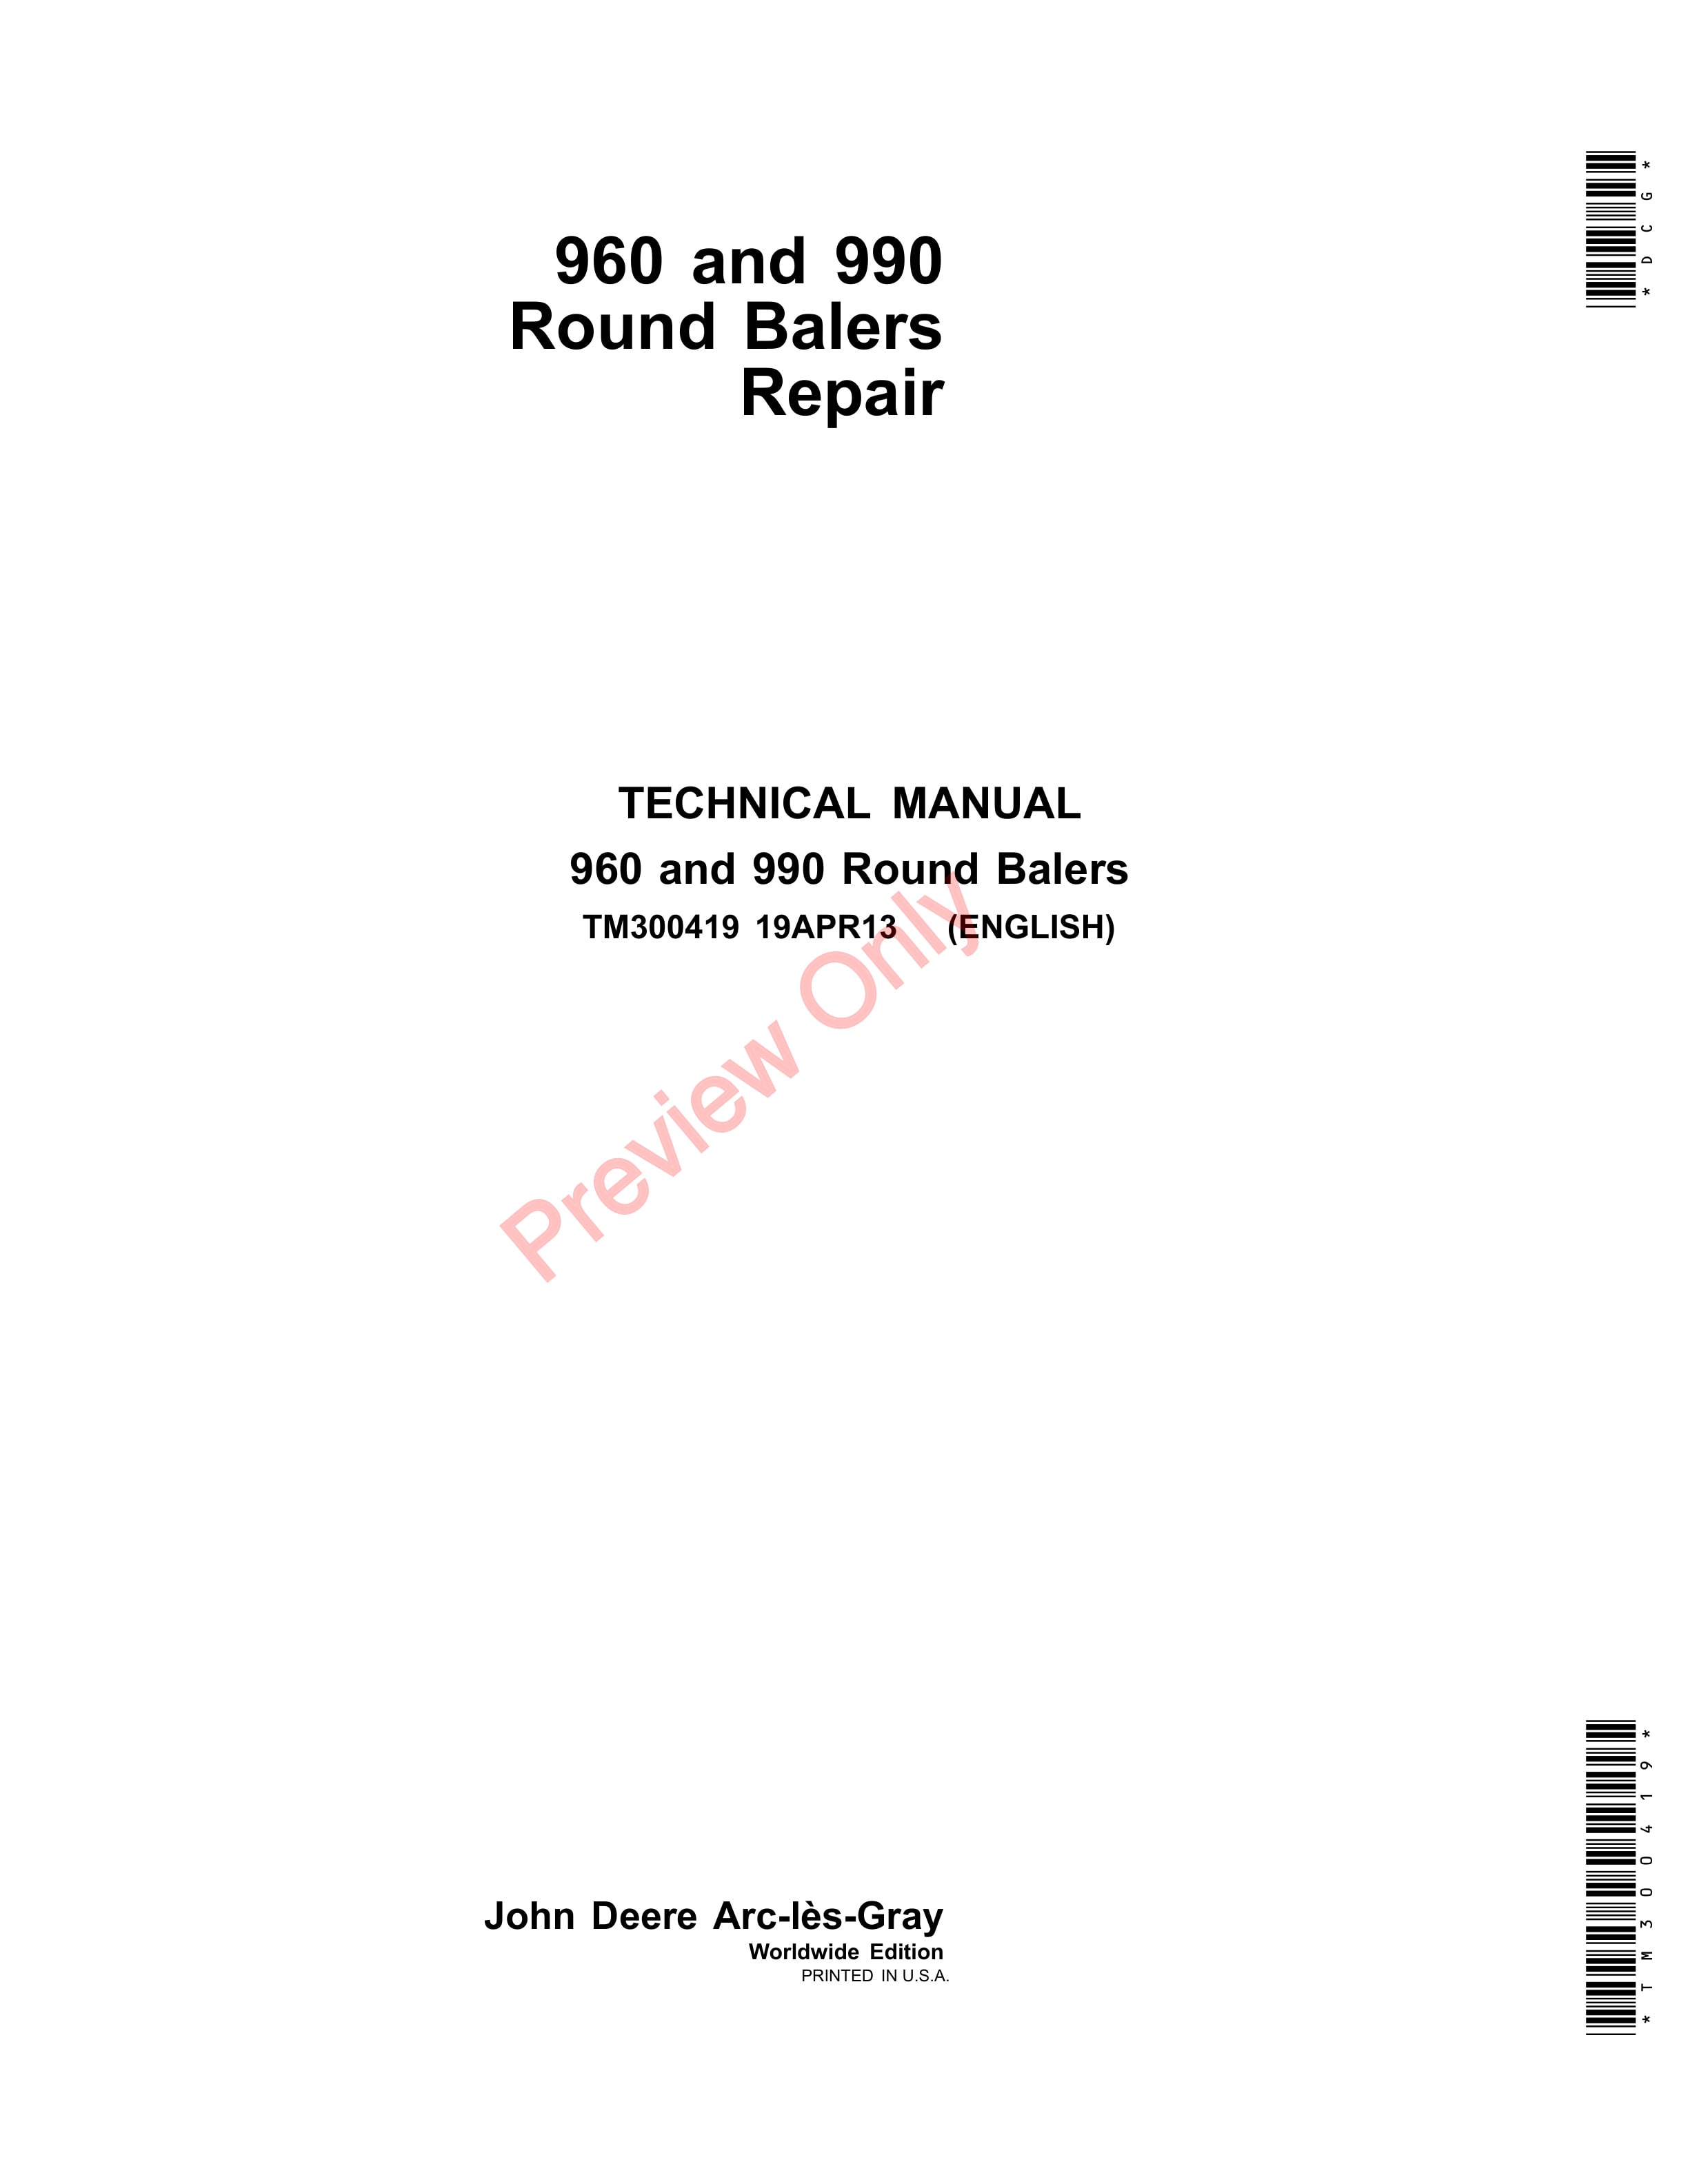 John Deere 960 and 990 Round Balers Technical Manual TM300419 19APR13 1